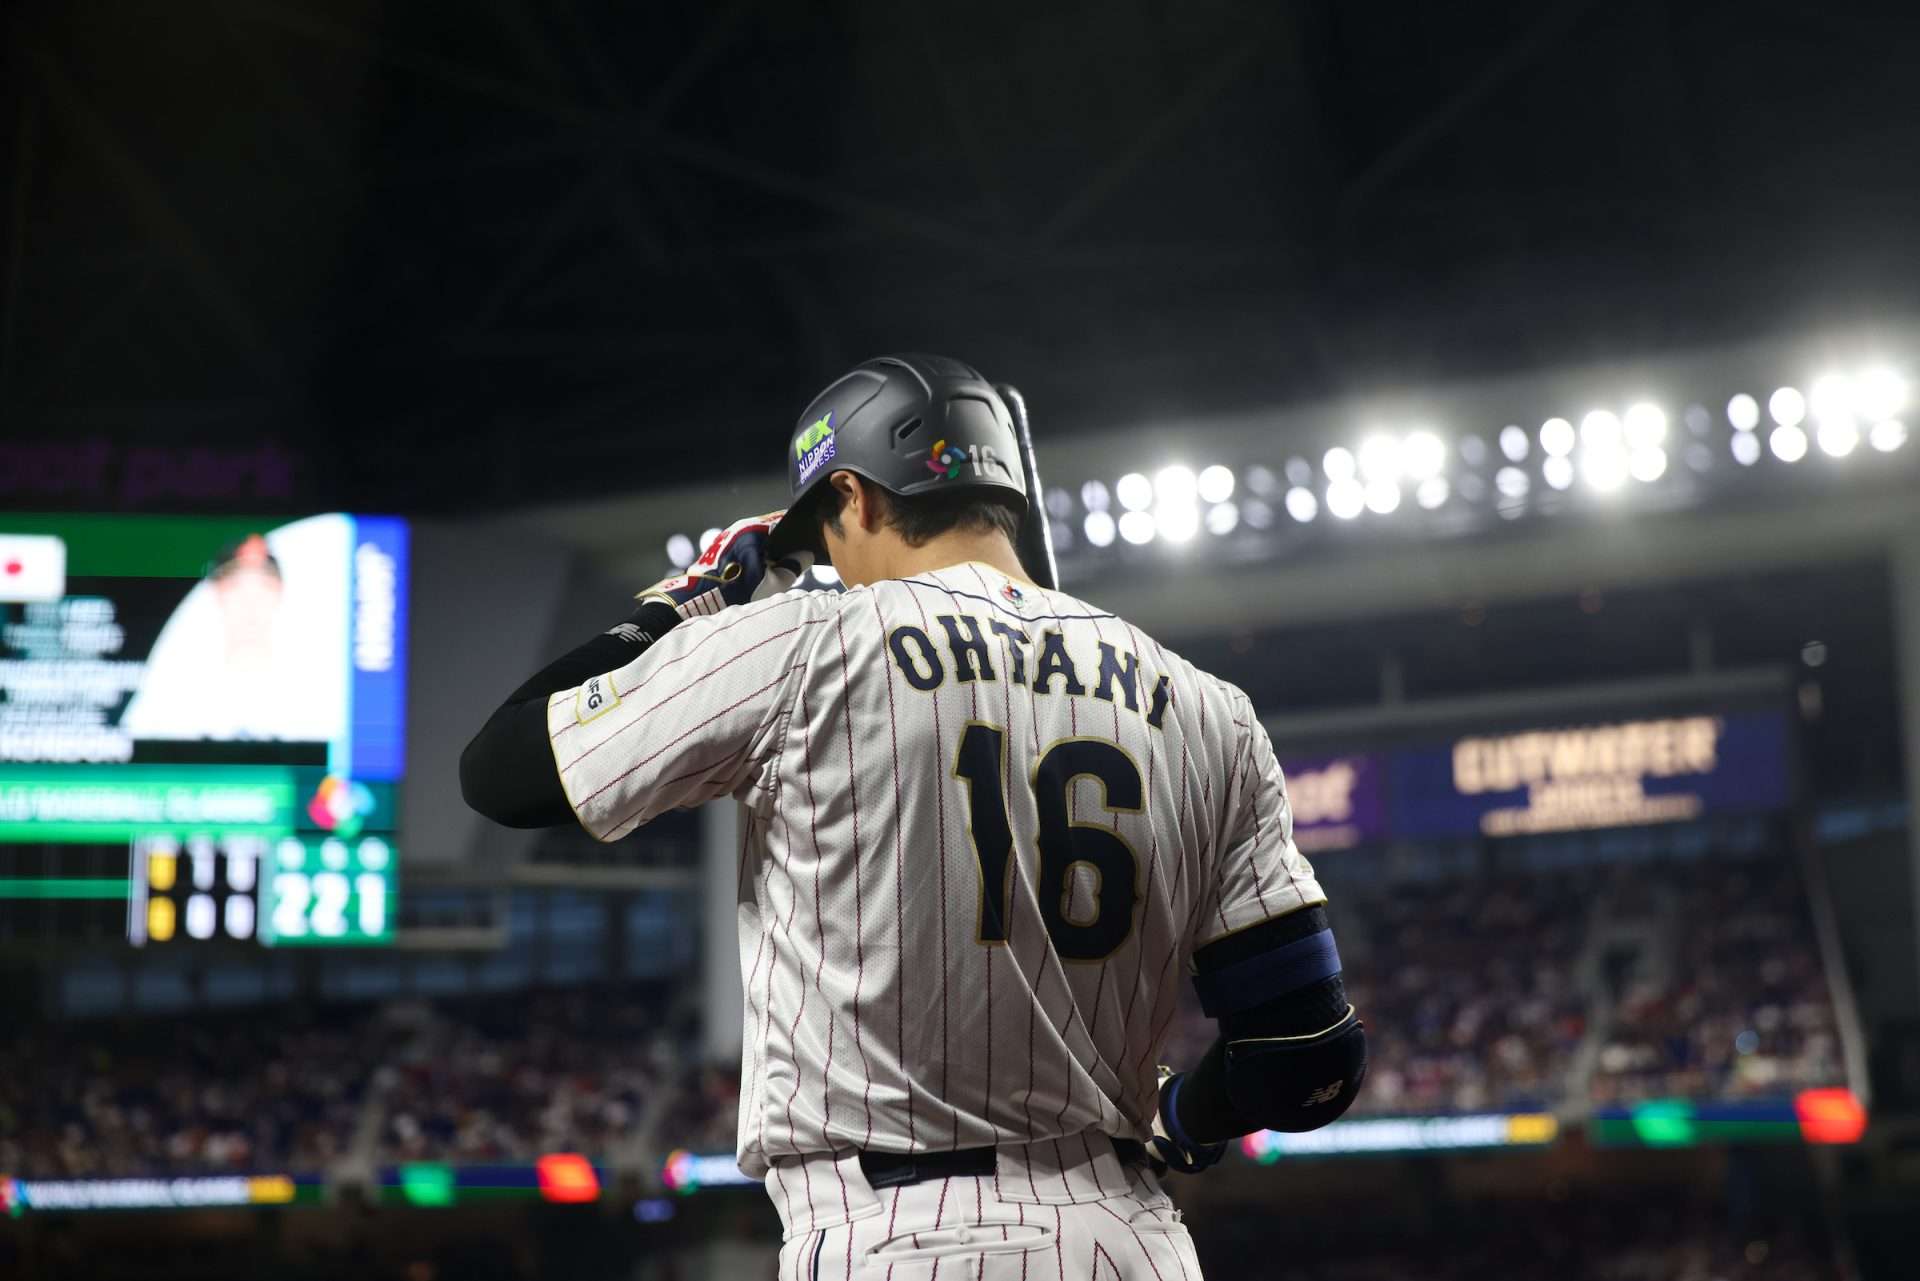 “Showtime” Ohtani: the new king of baseball